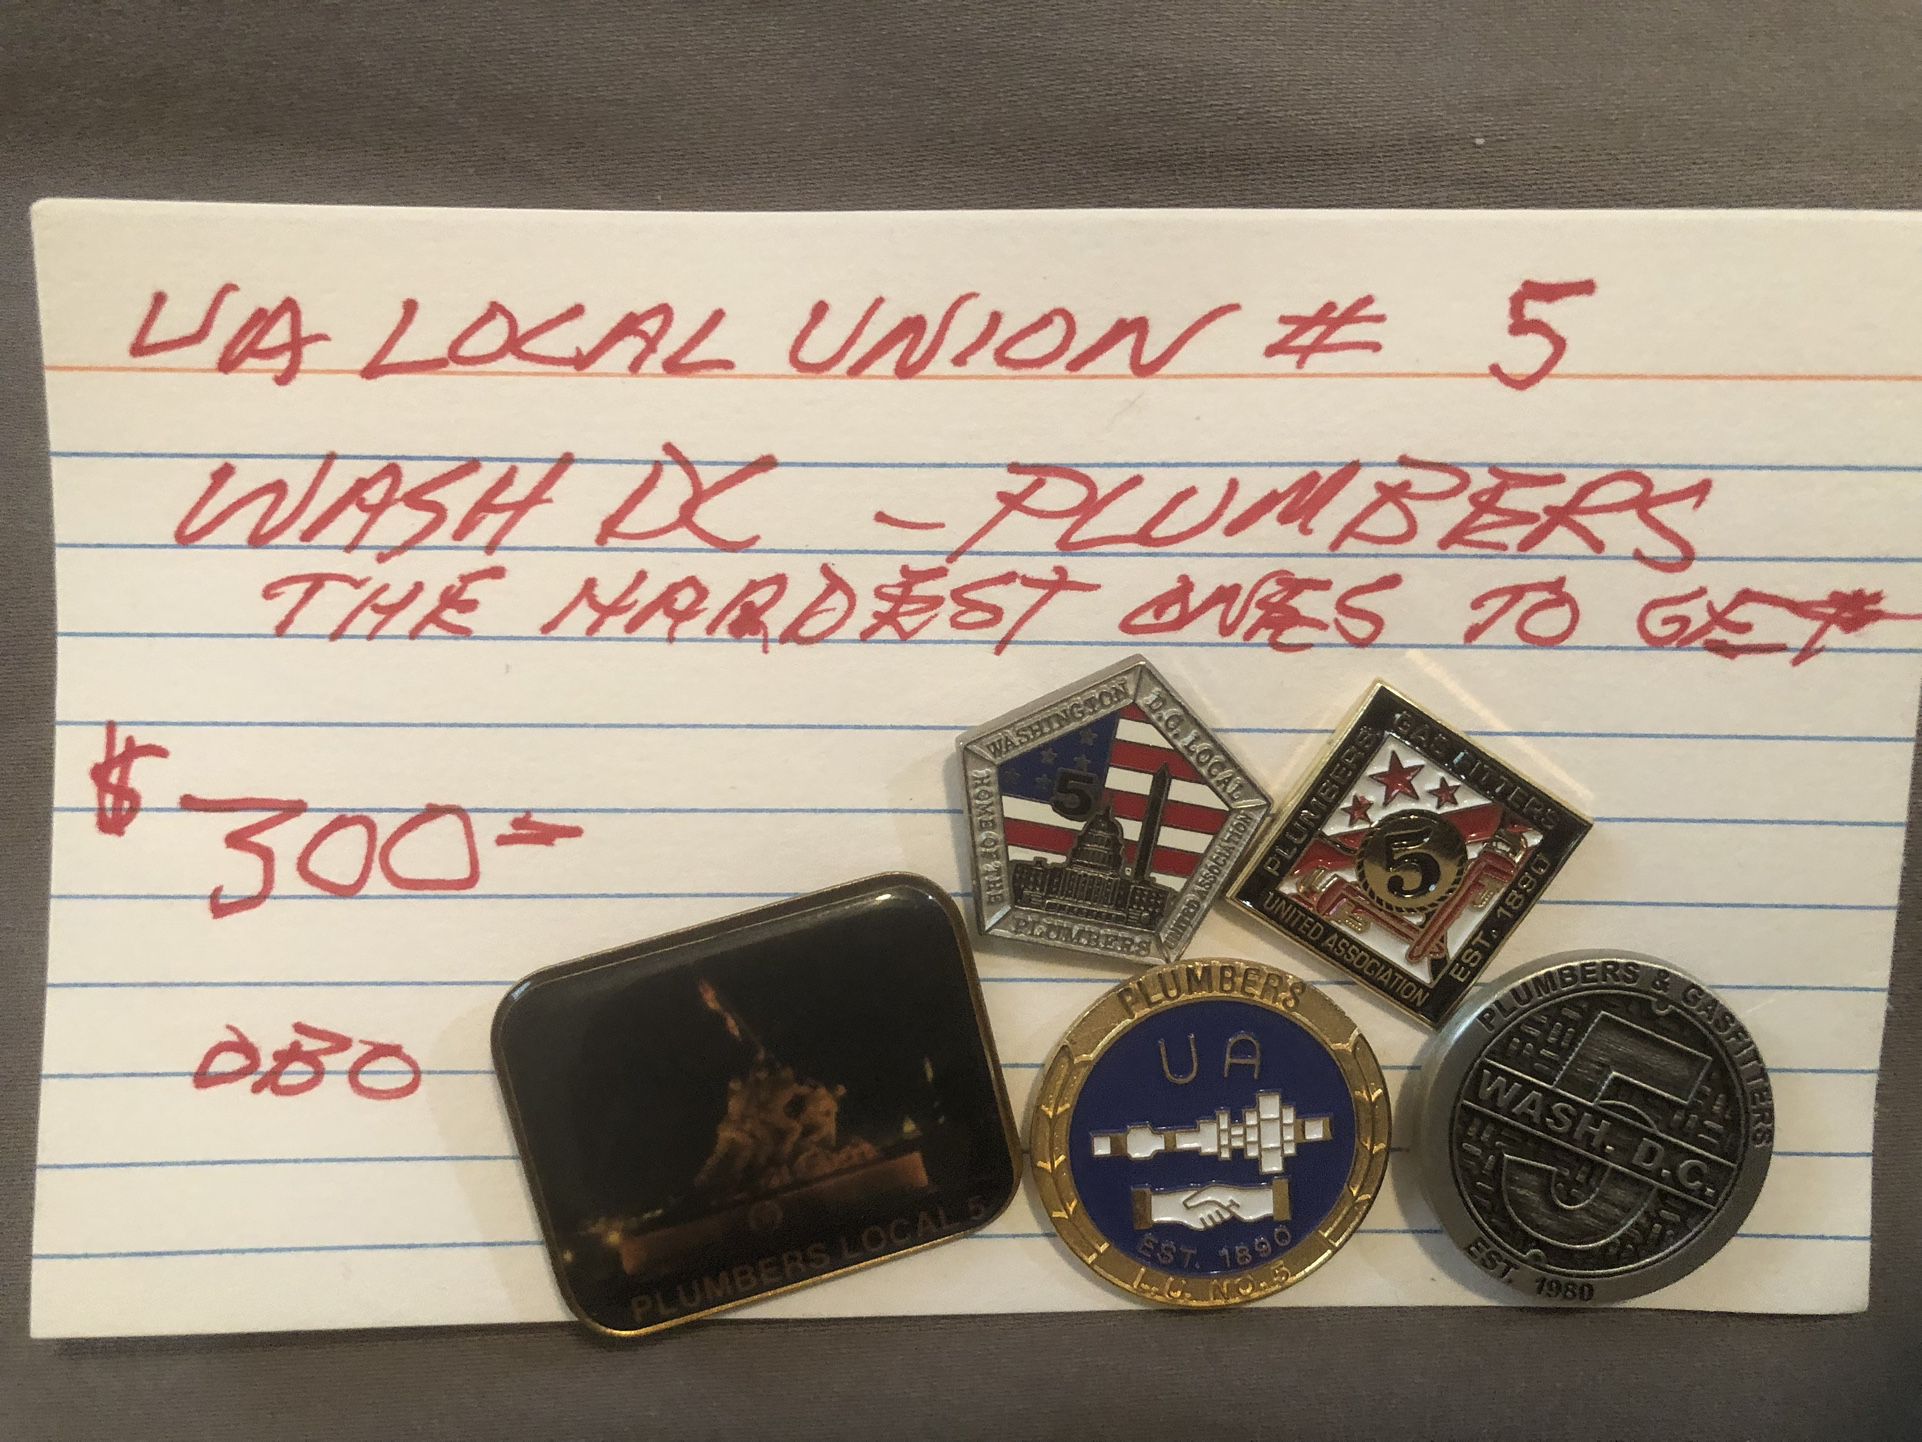 United Association Union Pin From Washington D. C.